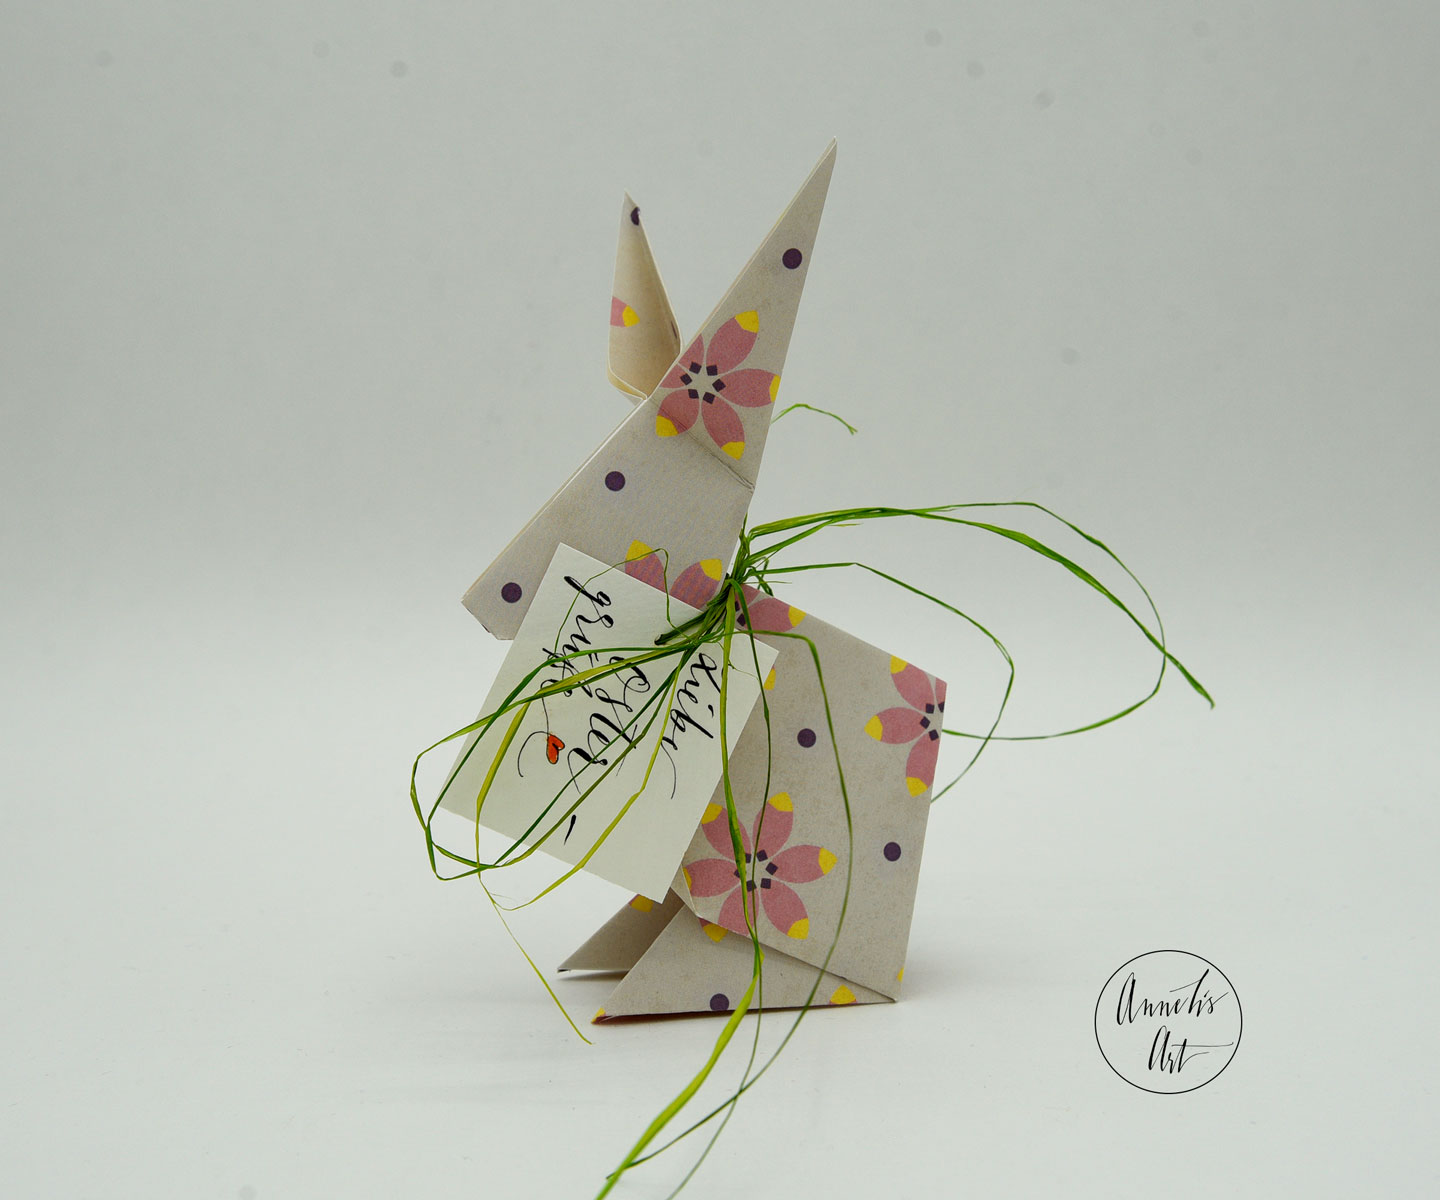 Rosablumiger Origami Osterhase mit grünem Band und Muster 